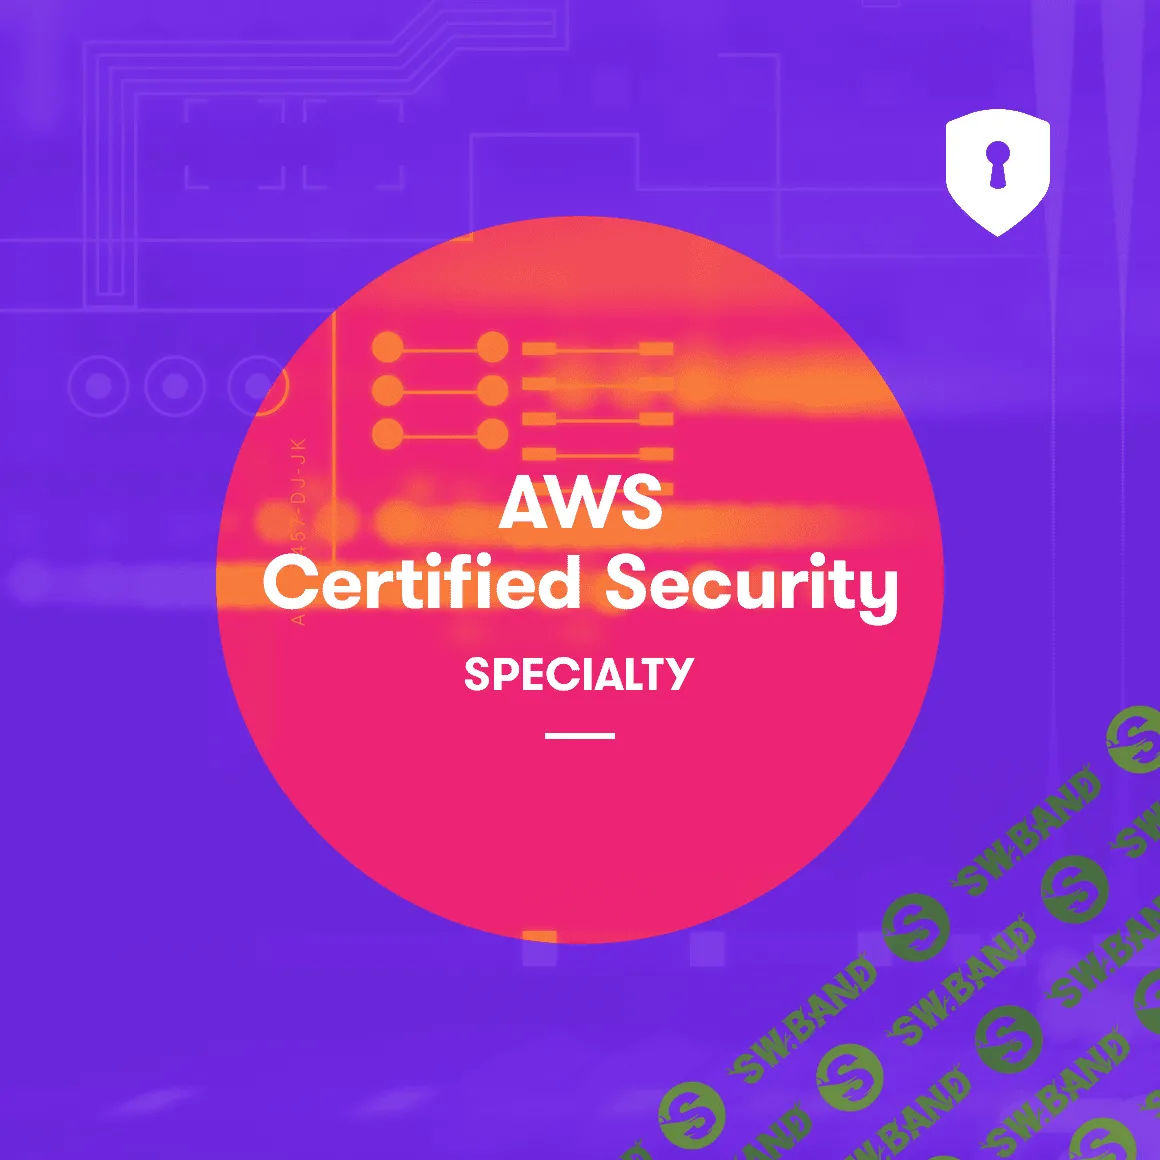 [acloud.guru] AWS Certified Security - Specialty 2019